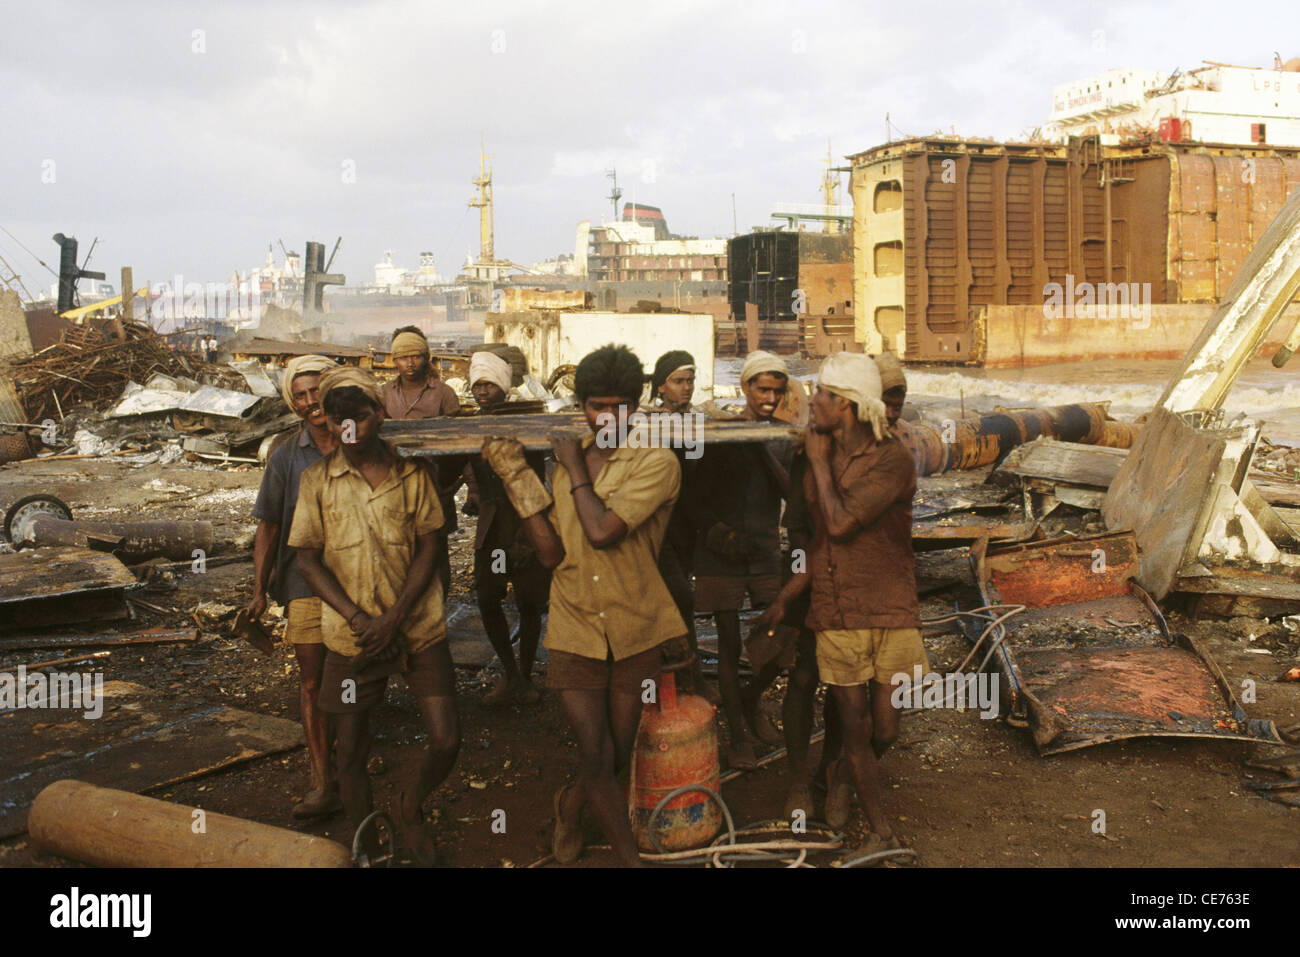 RVA 83129 : Indios hombres llevando la chatarra alang el desguace yard gujarat india Foto de stock